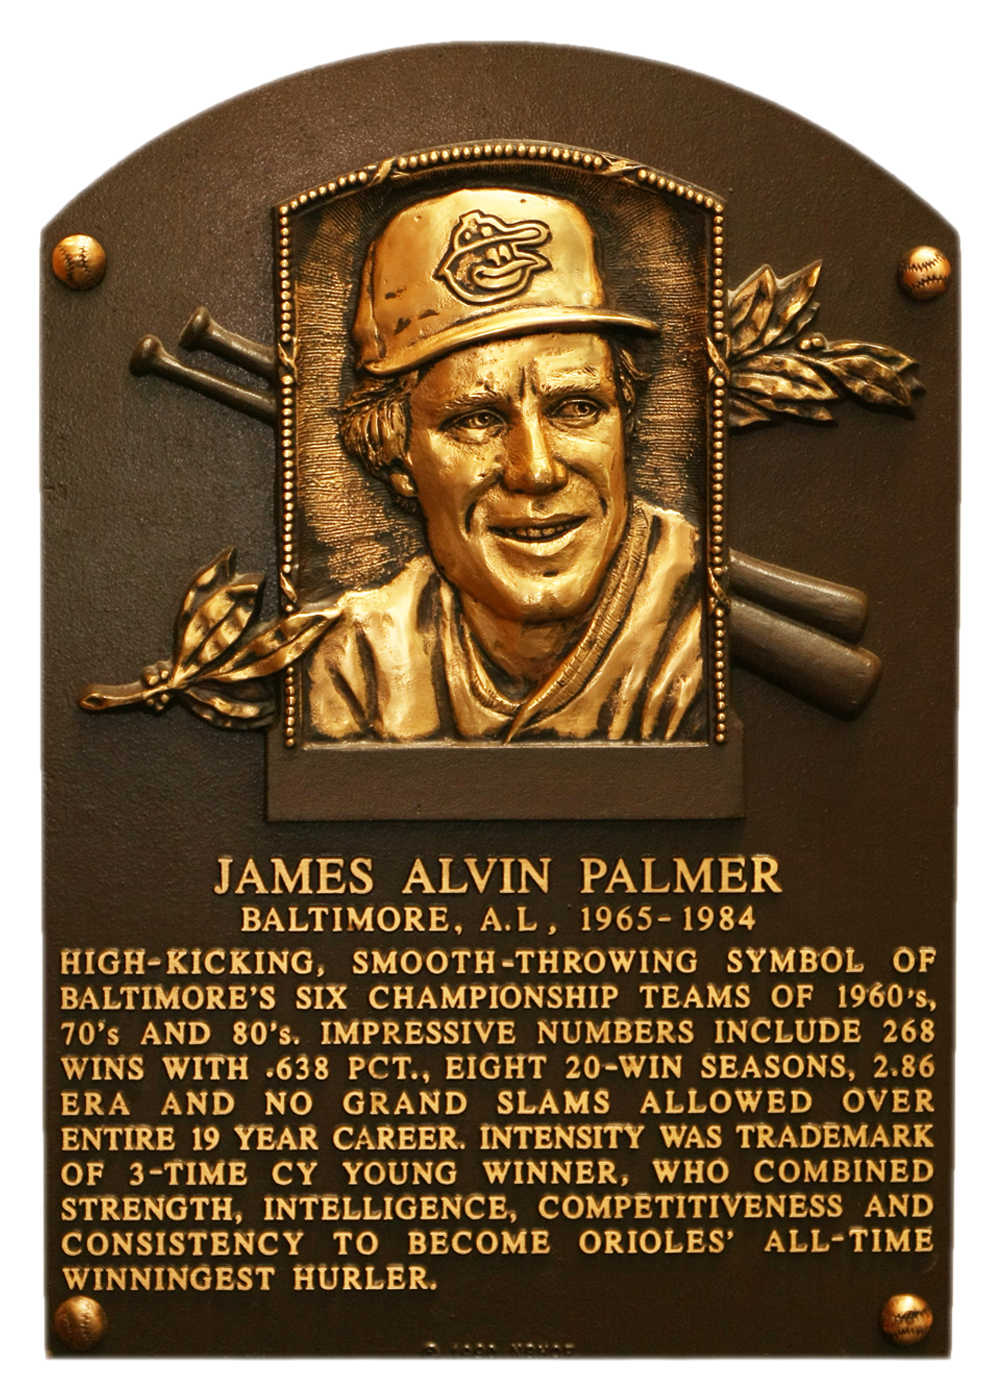 Jim Palmer Hall of Fame plaque